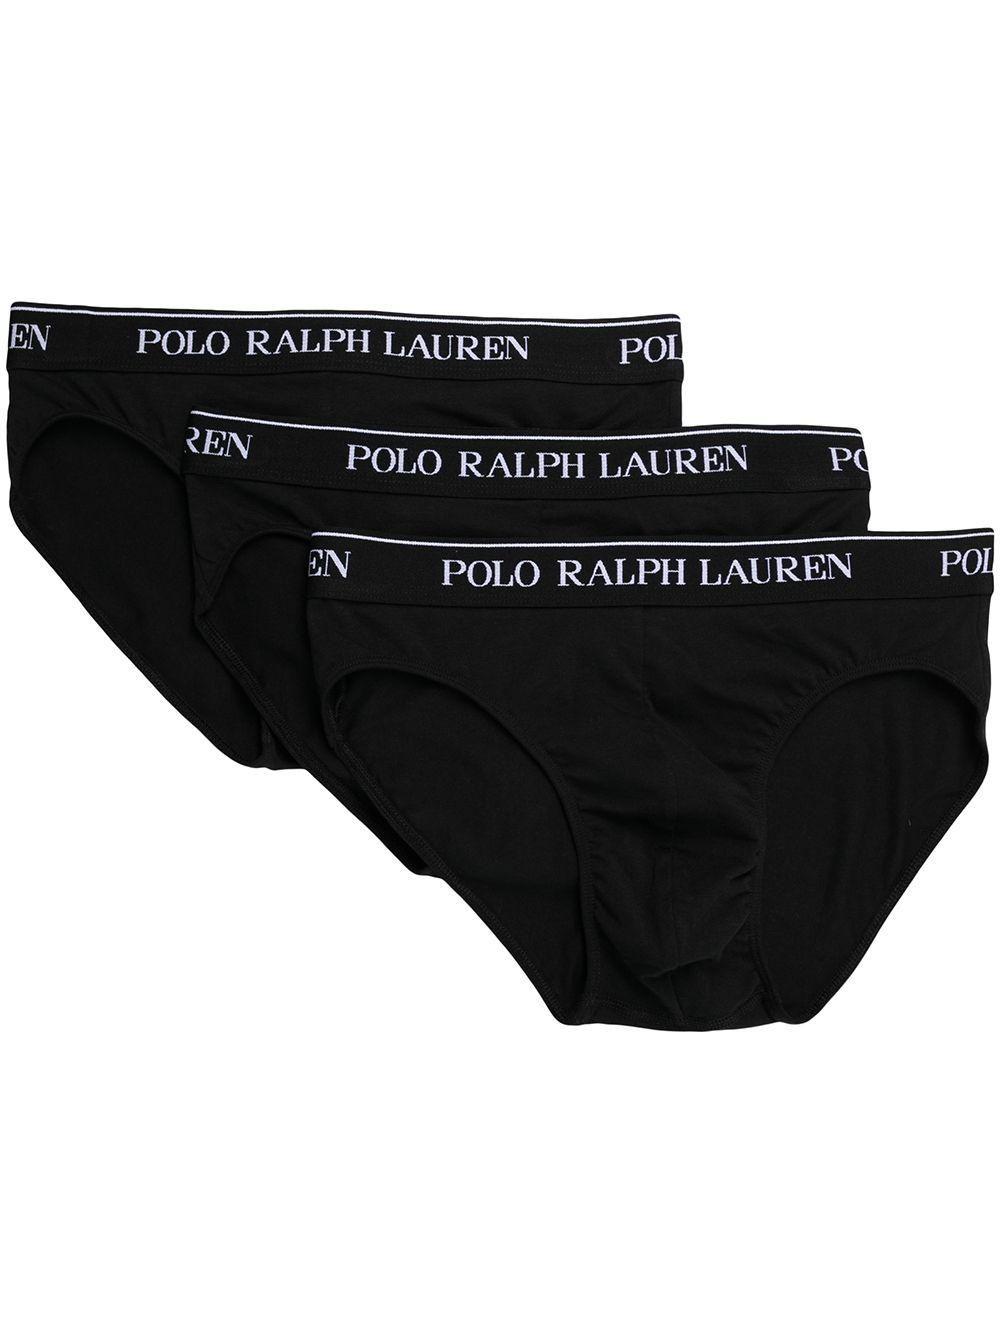 фото Polo ralph lauren трусы-брифы с логотипом